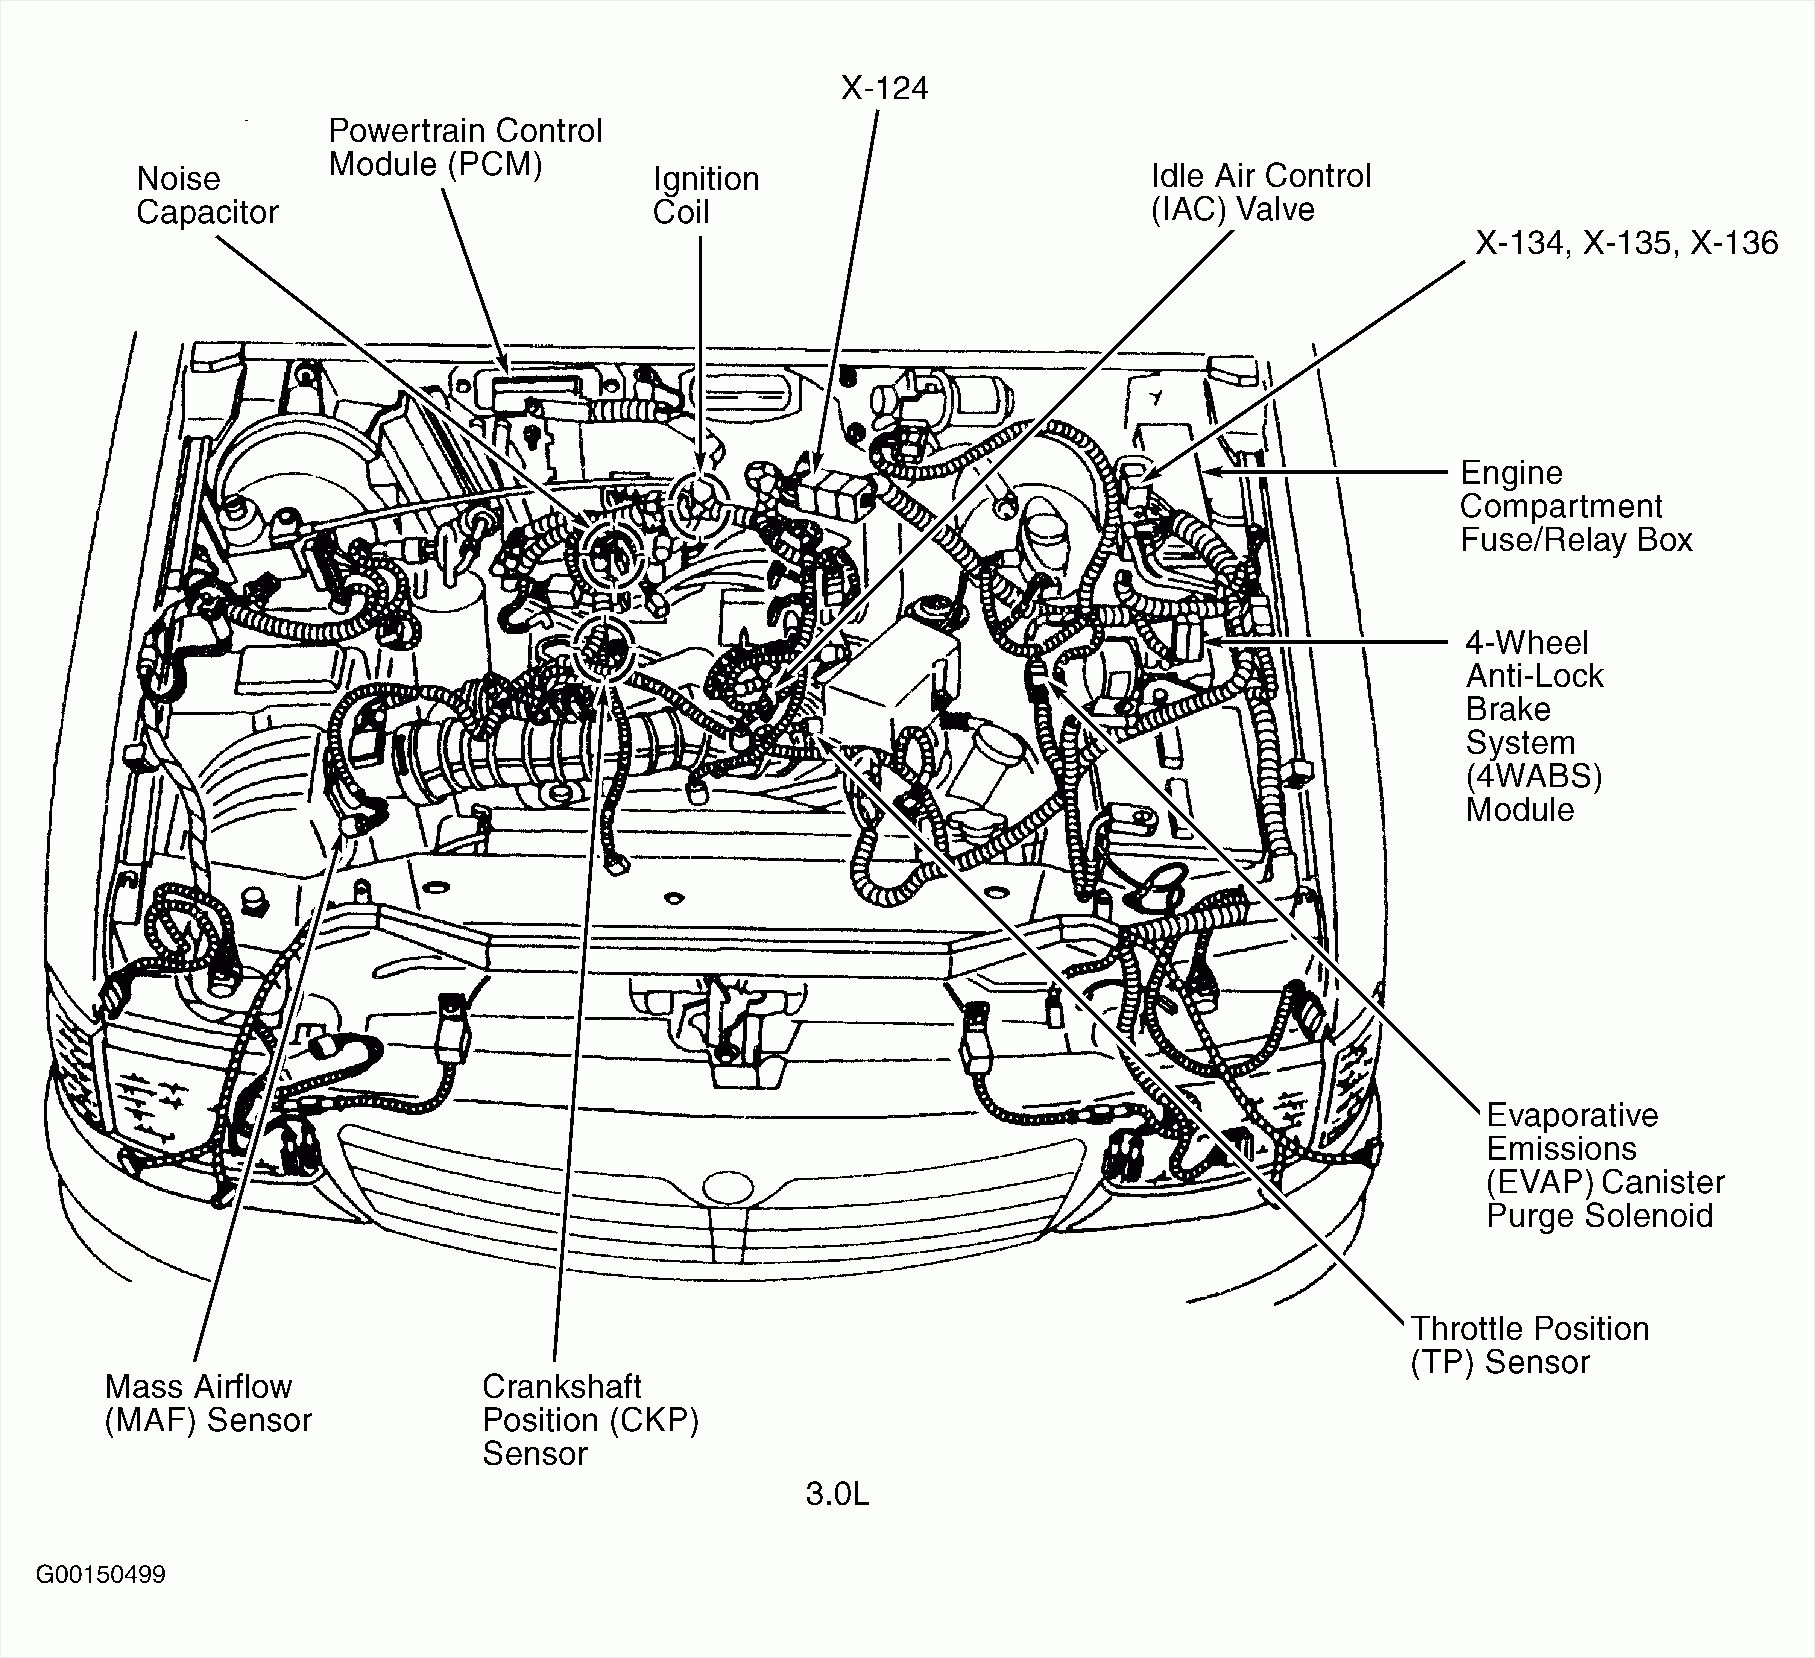 2001 Chevy S10 Engine Diagram Chevy 2 8 Engine Diagram Schema Wiring Diagram Of 2001 Chevy S10 Engine Diagram